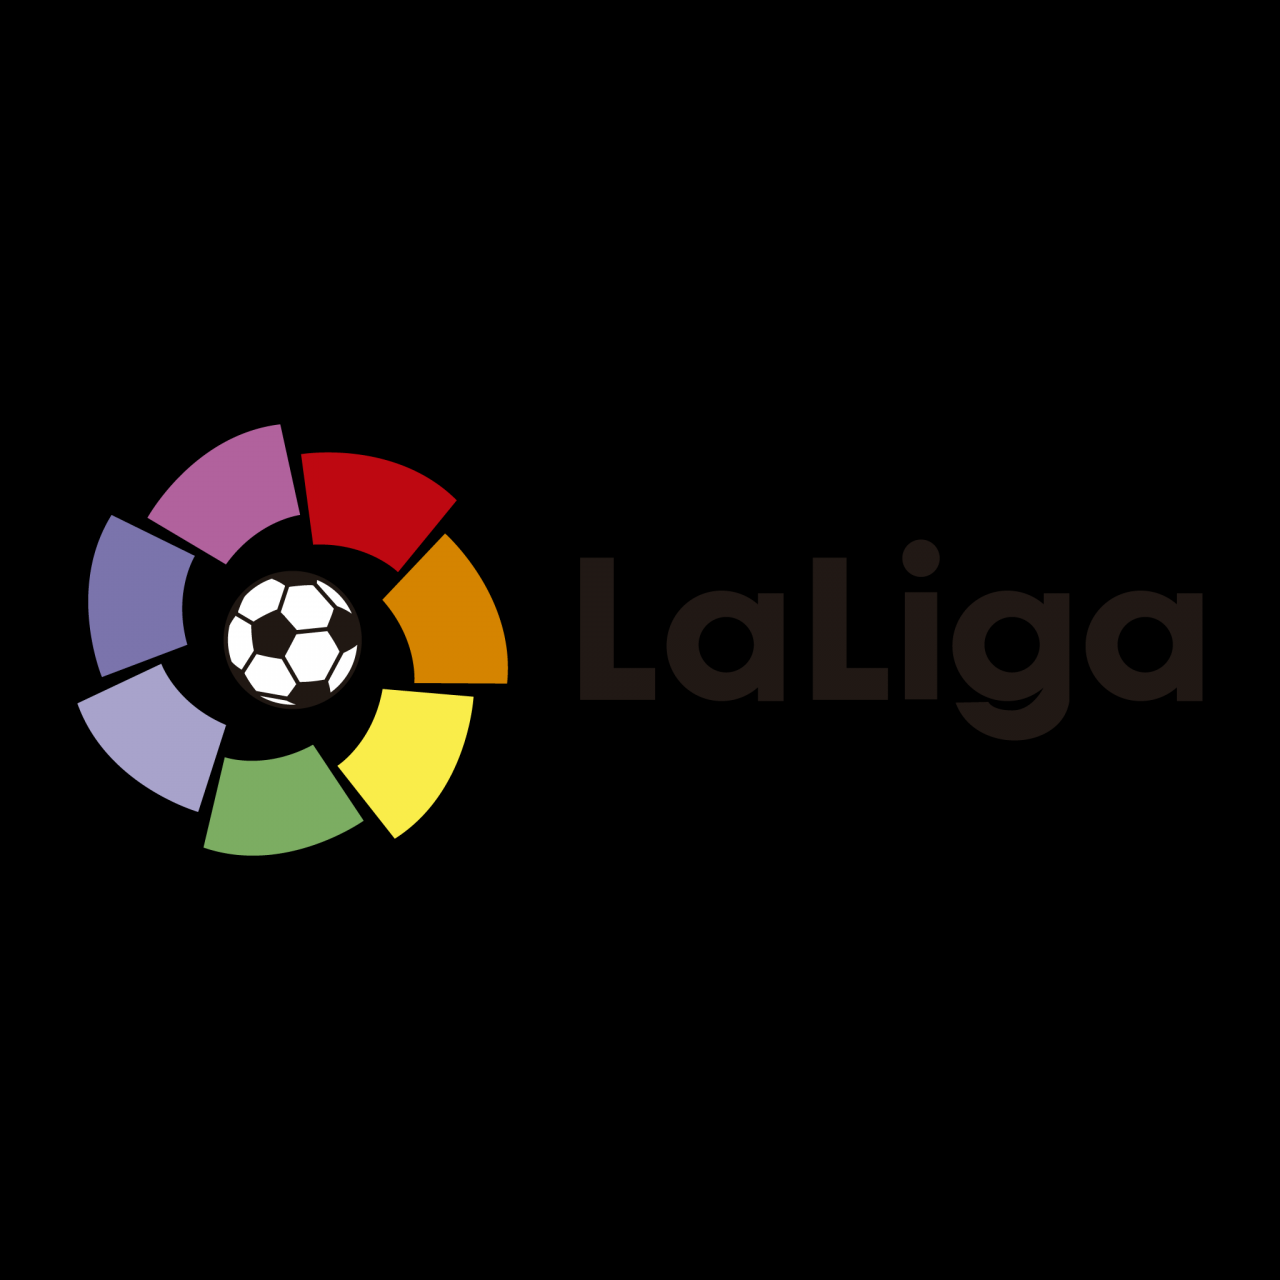 Barcelona fined by La Liga for violating Financial Fair Play regulations